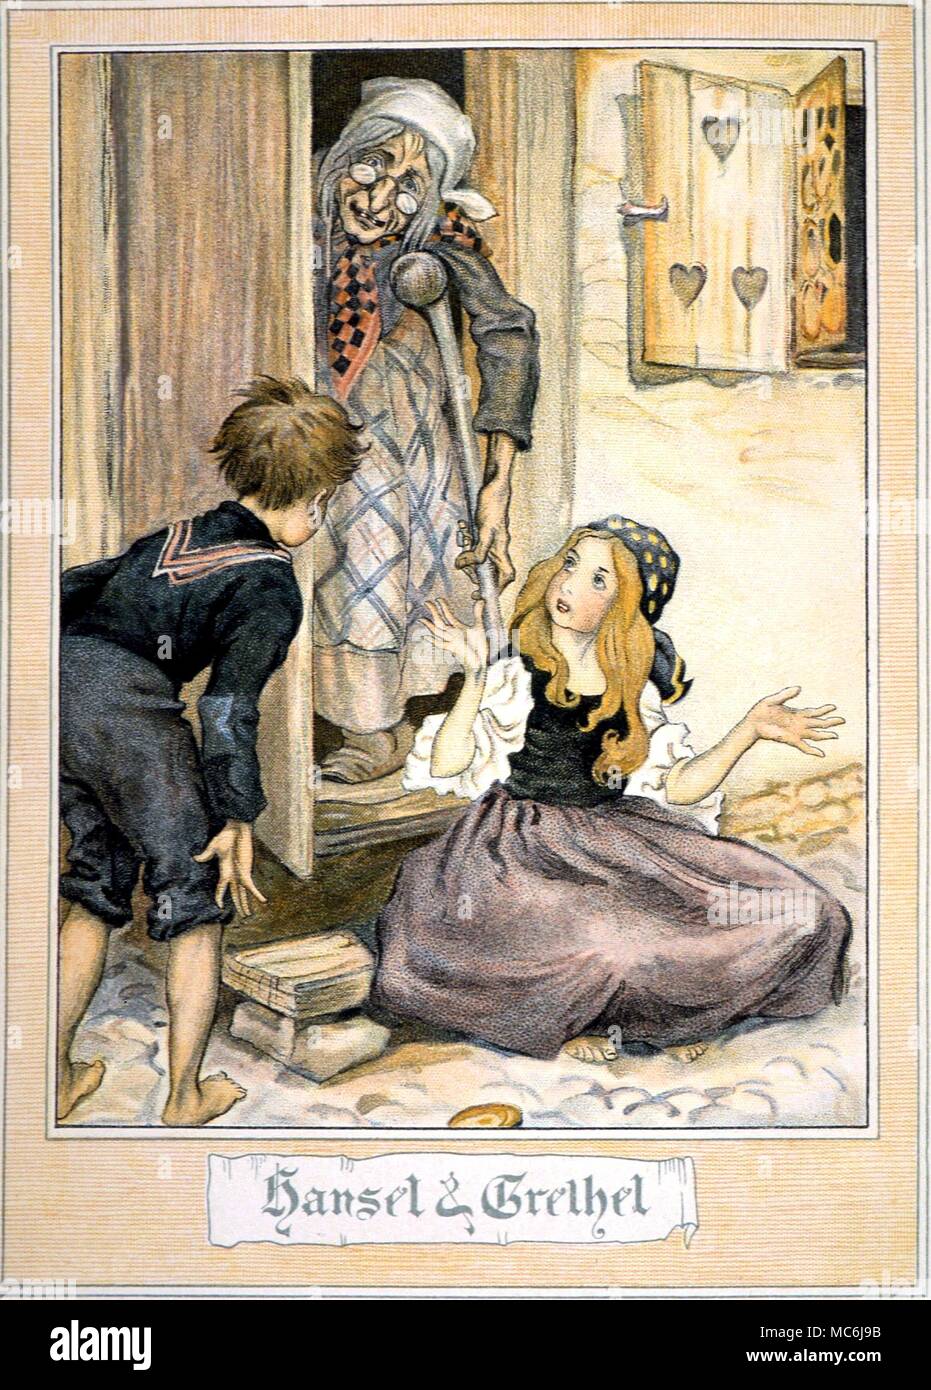 Hansel and Gretel, Literawiki